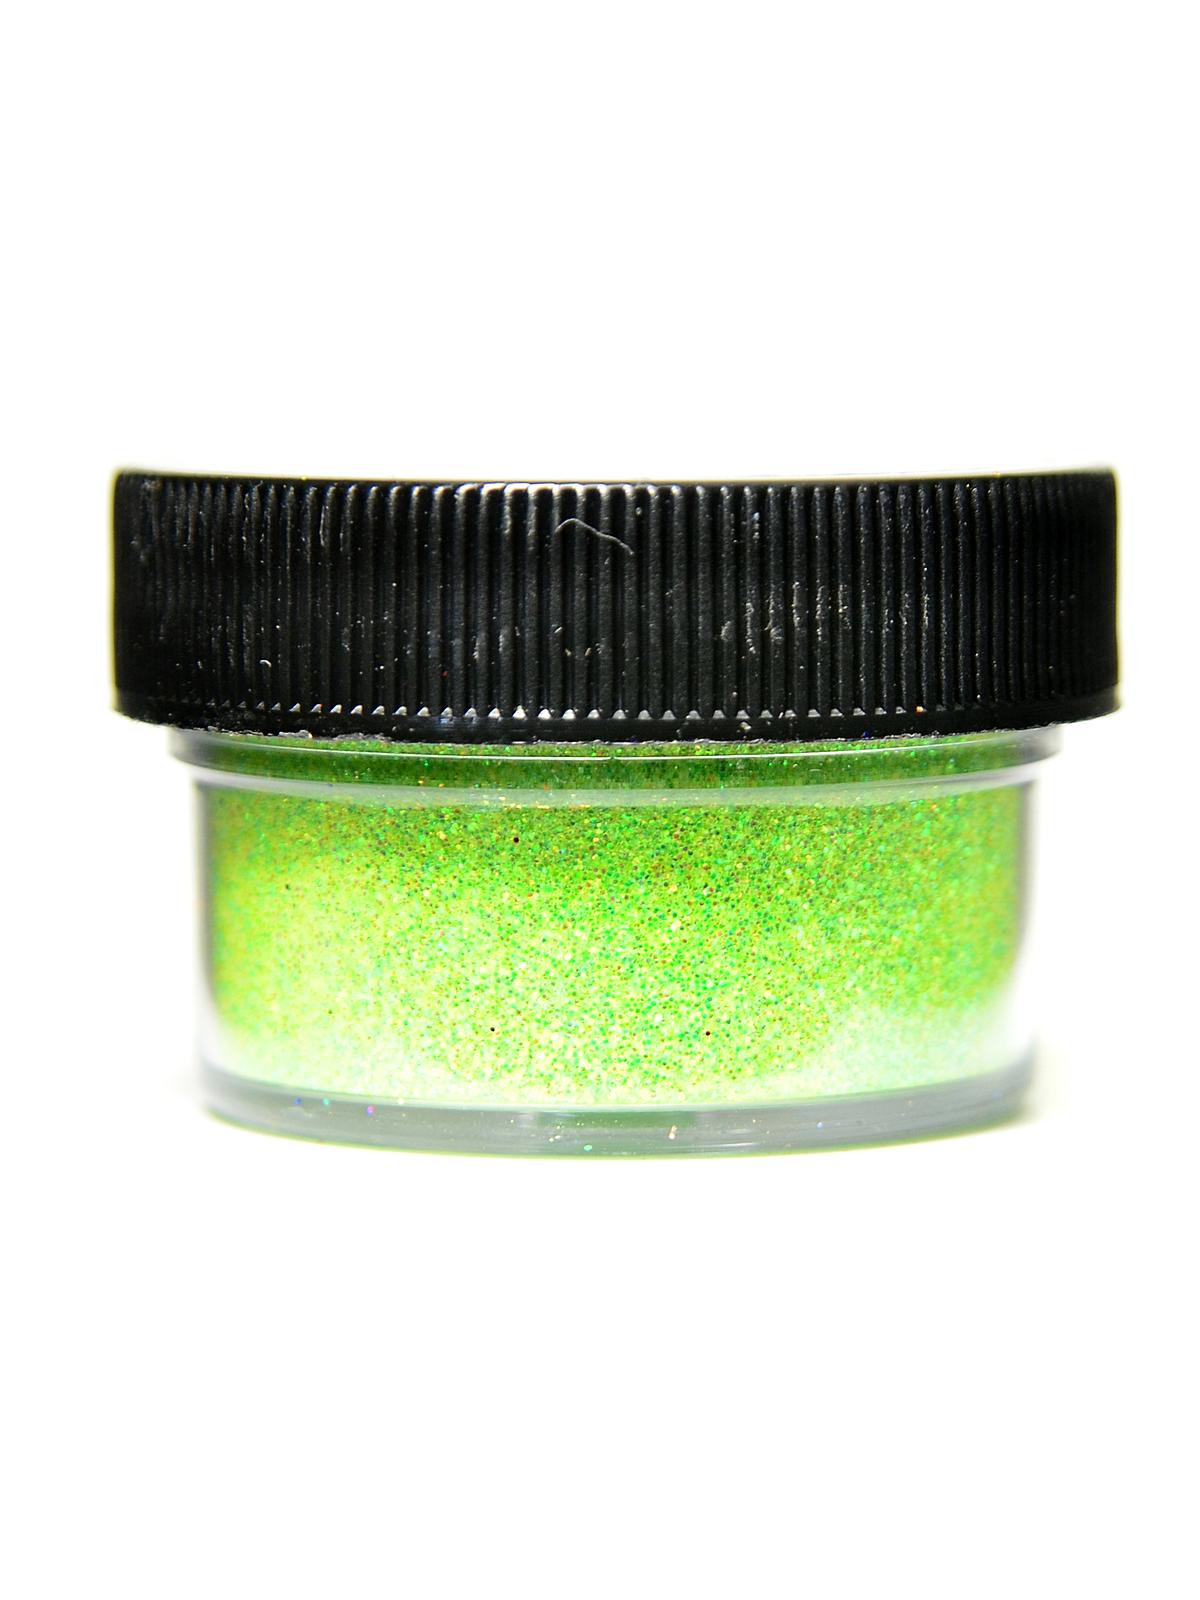 Ultrafine Transparent Glitter Key Lime 1 2 Oz. Jar